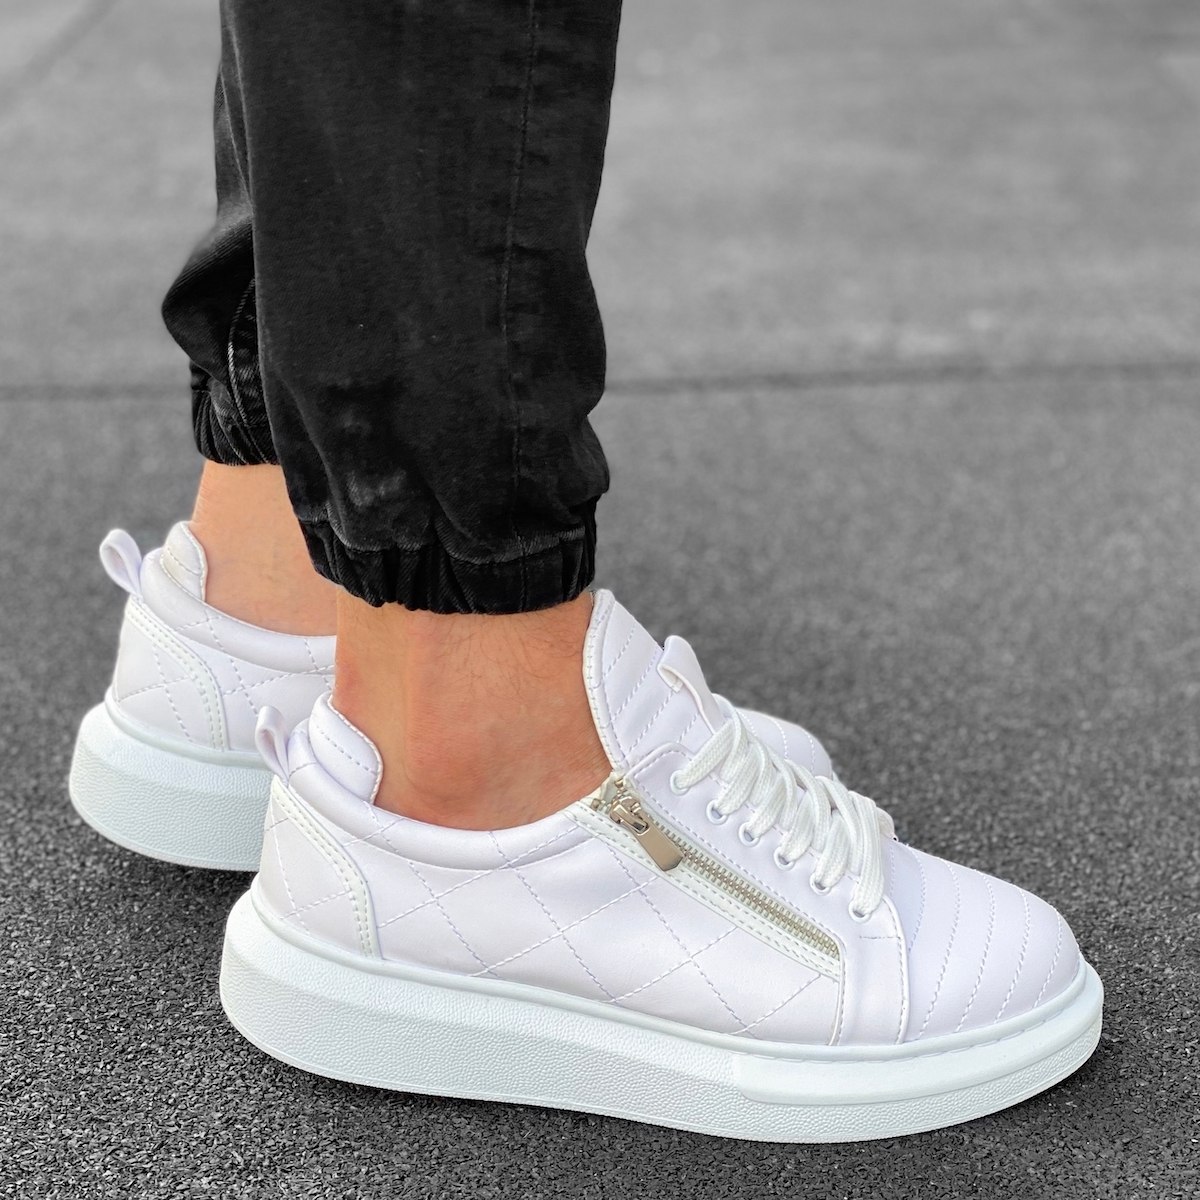 Men’s Stitch Zipper Sneakers Shoes White | Martin Valen